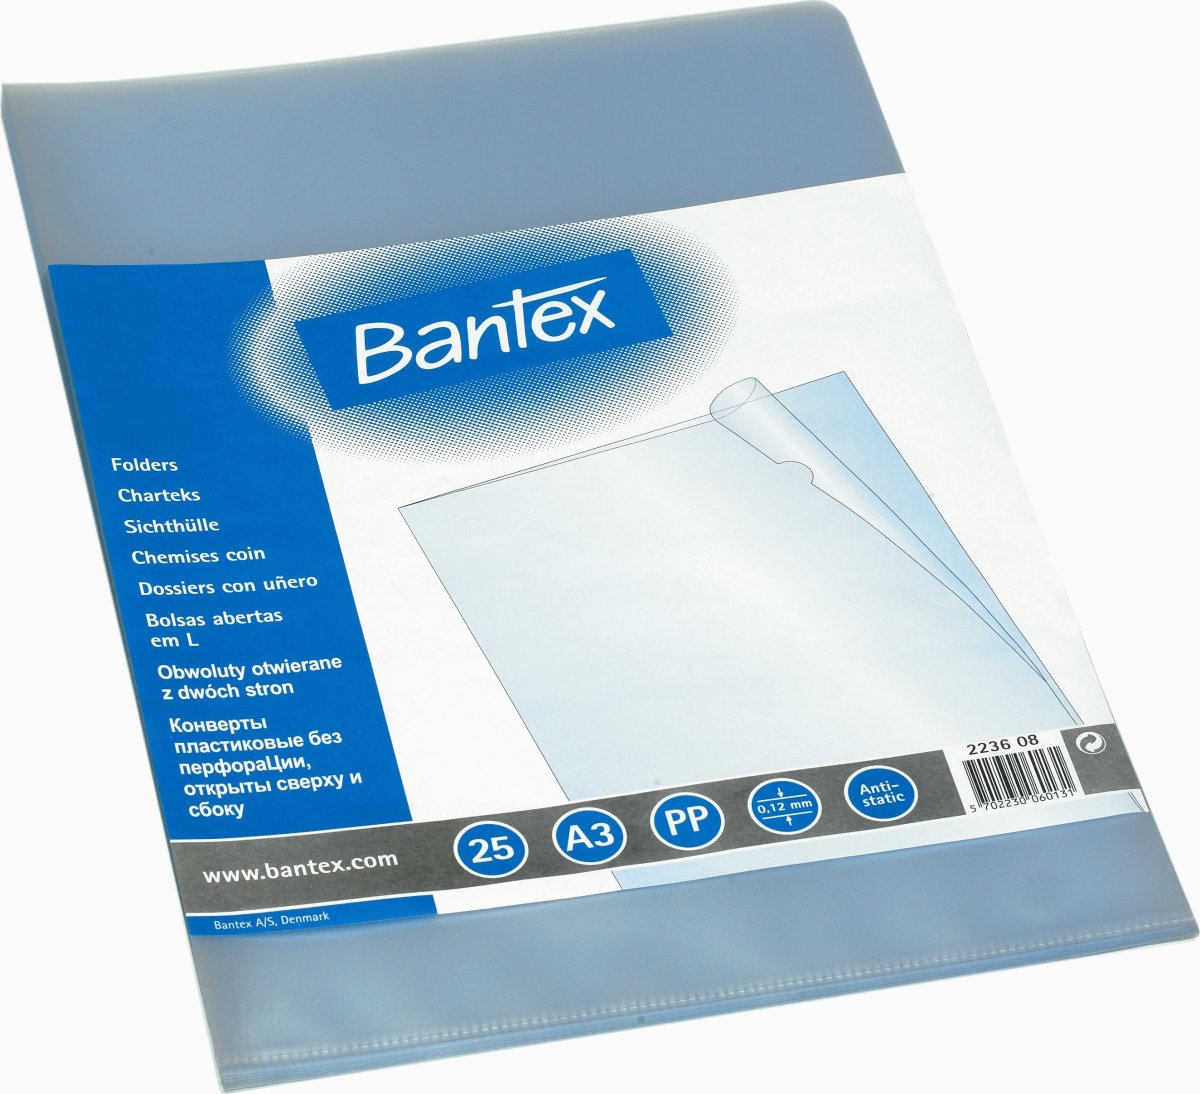 Bantex chartek A3, 0,12mm